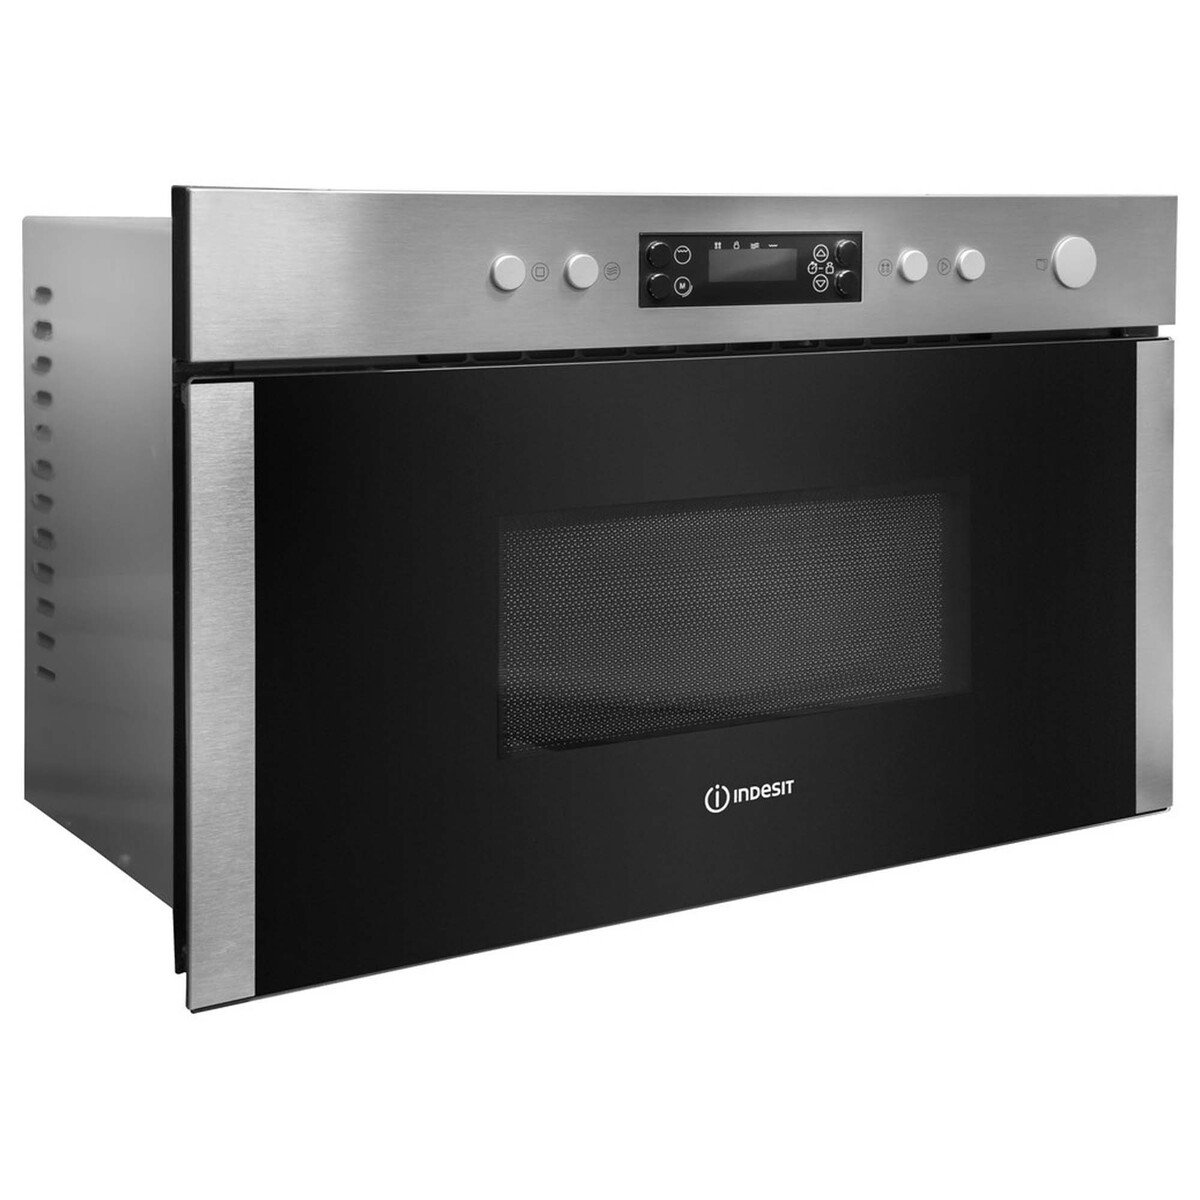 اشتري قم بشراء Indesit Microwave With Grill MWi5213iXUK 22LTR Online at Best Price من الموقع - من لولو هايبر ماركت Microwave Ovens في الامارات